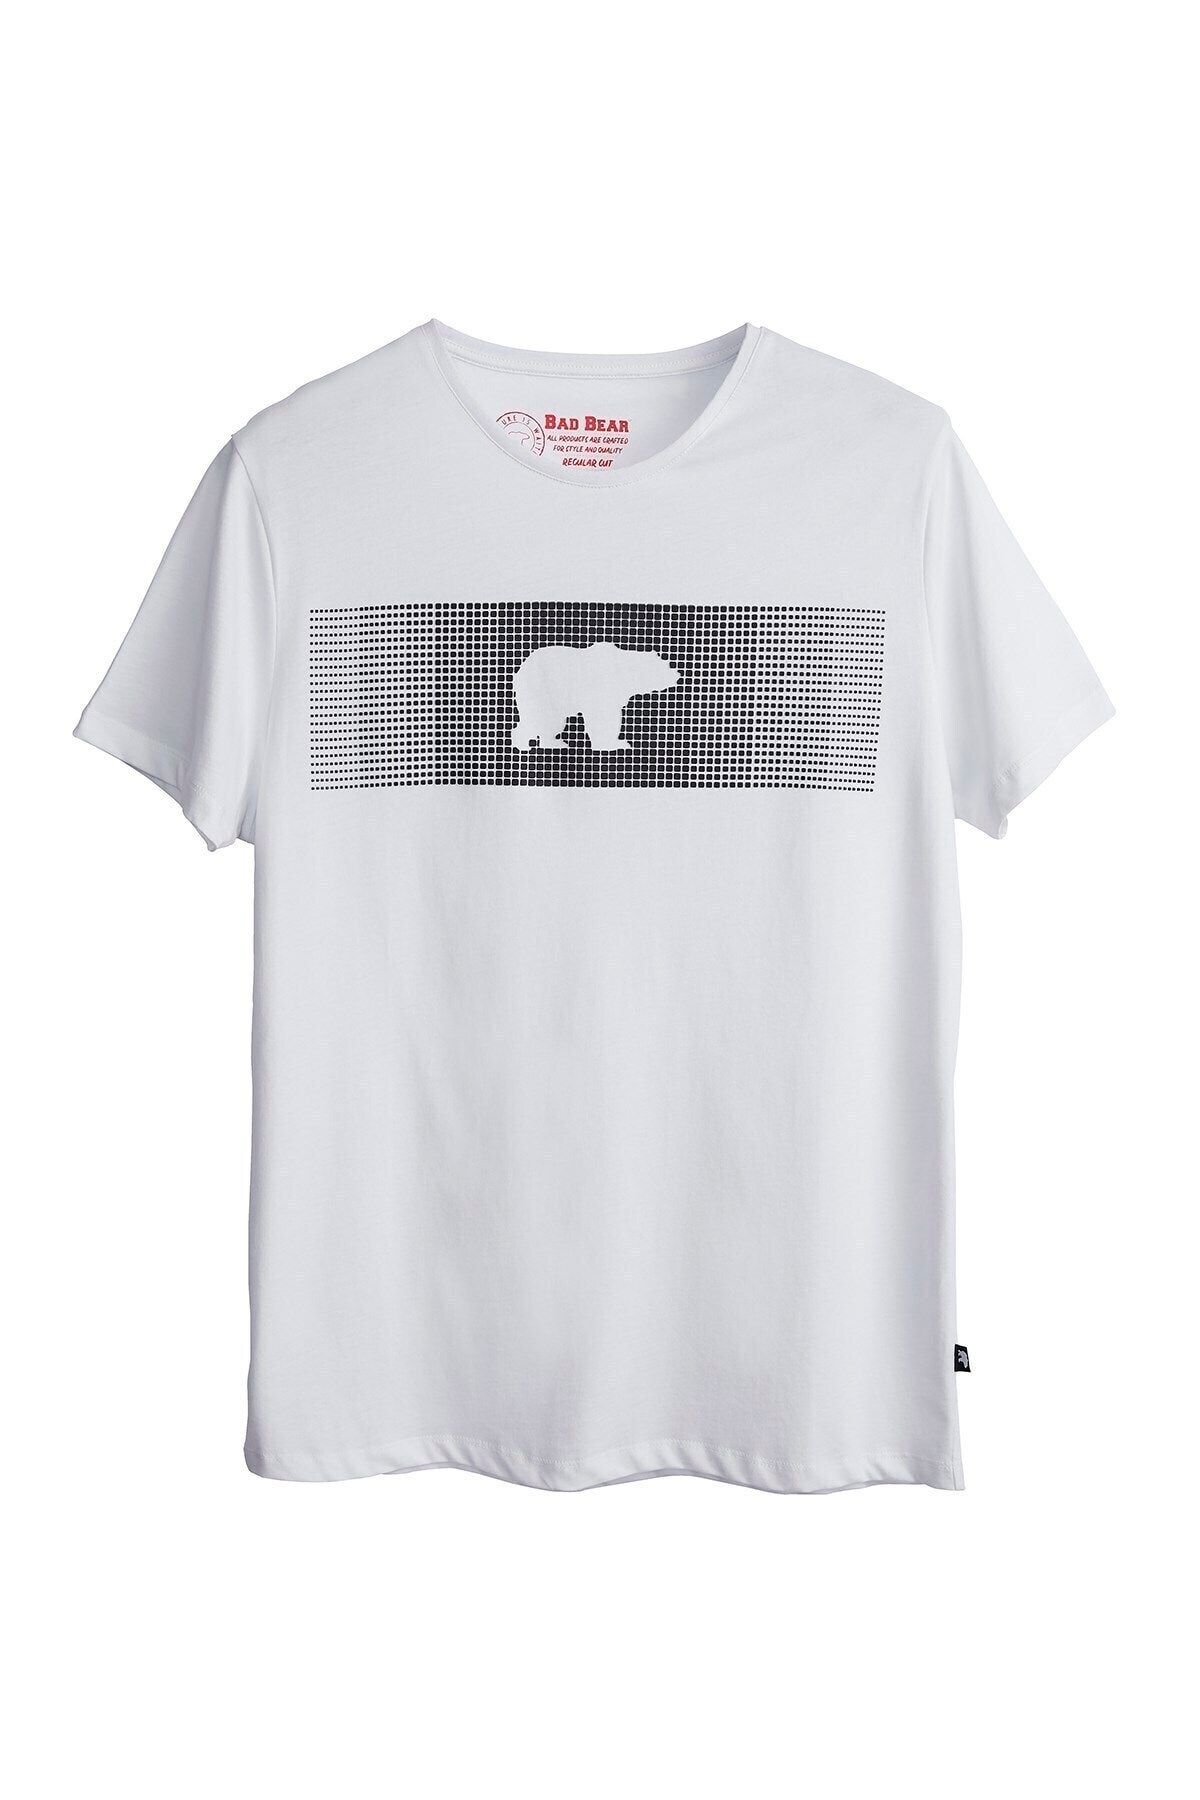 Bad Bear Badbear Fancy T-shirt Erkek Tişört 20.01.07.024off-white